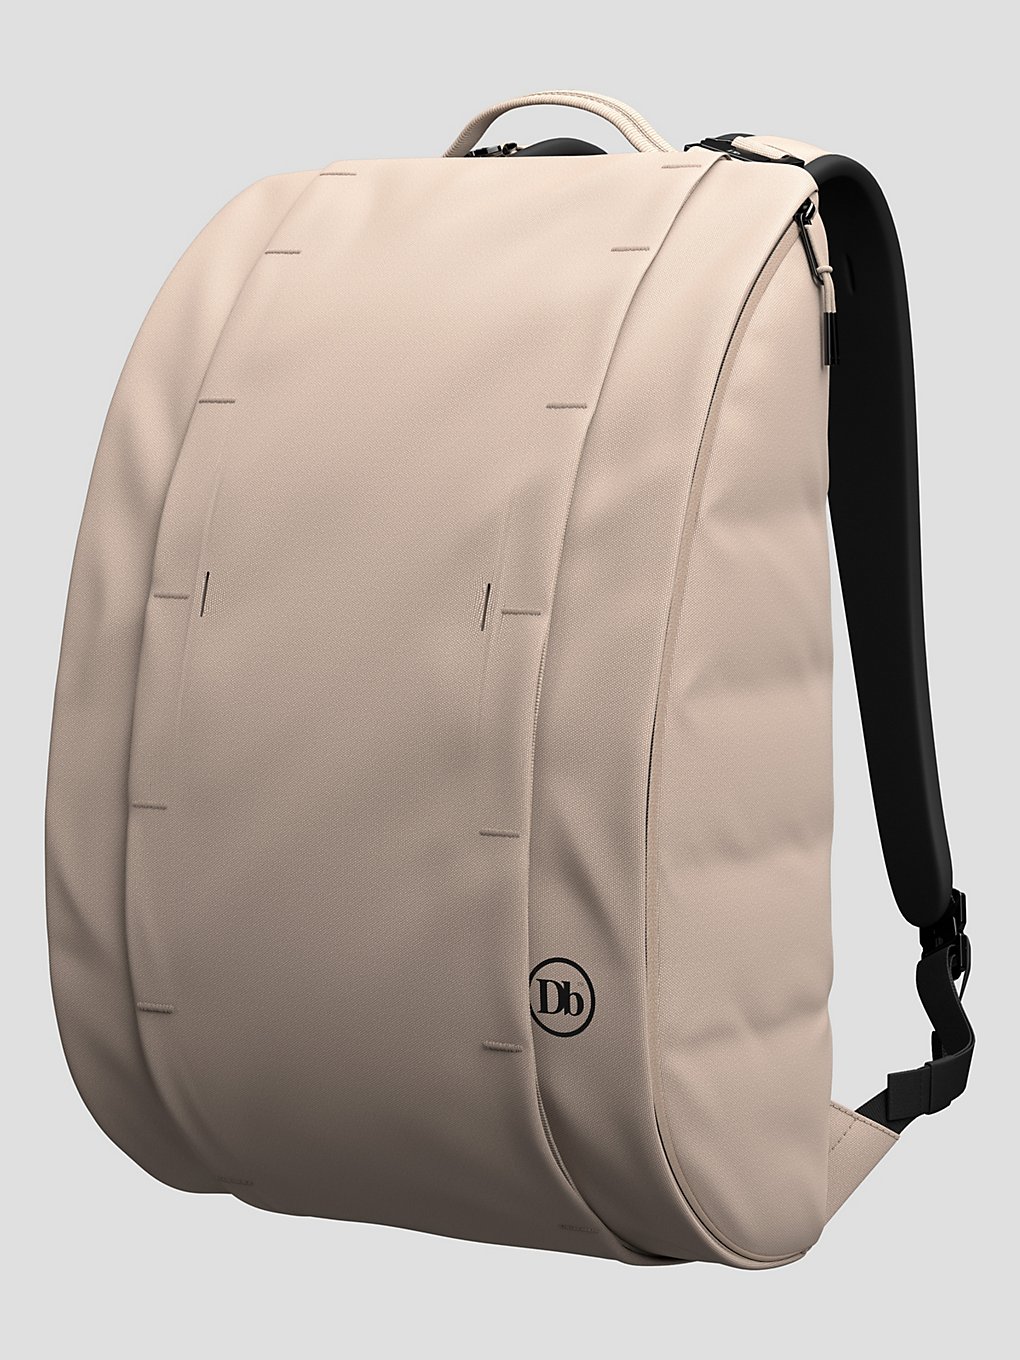 Db Hugger Base 15L Backpack fogbow beige kaufen